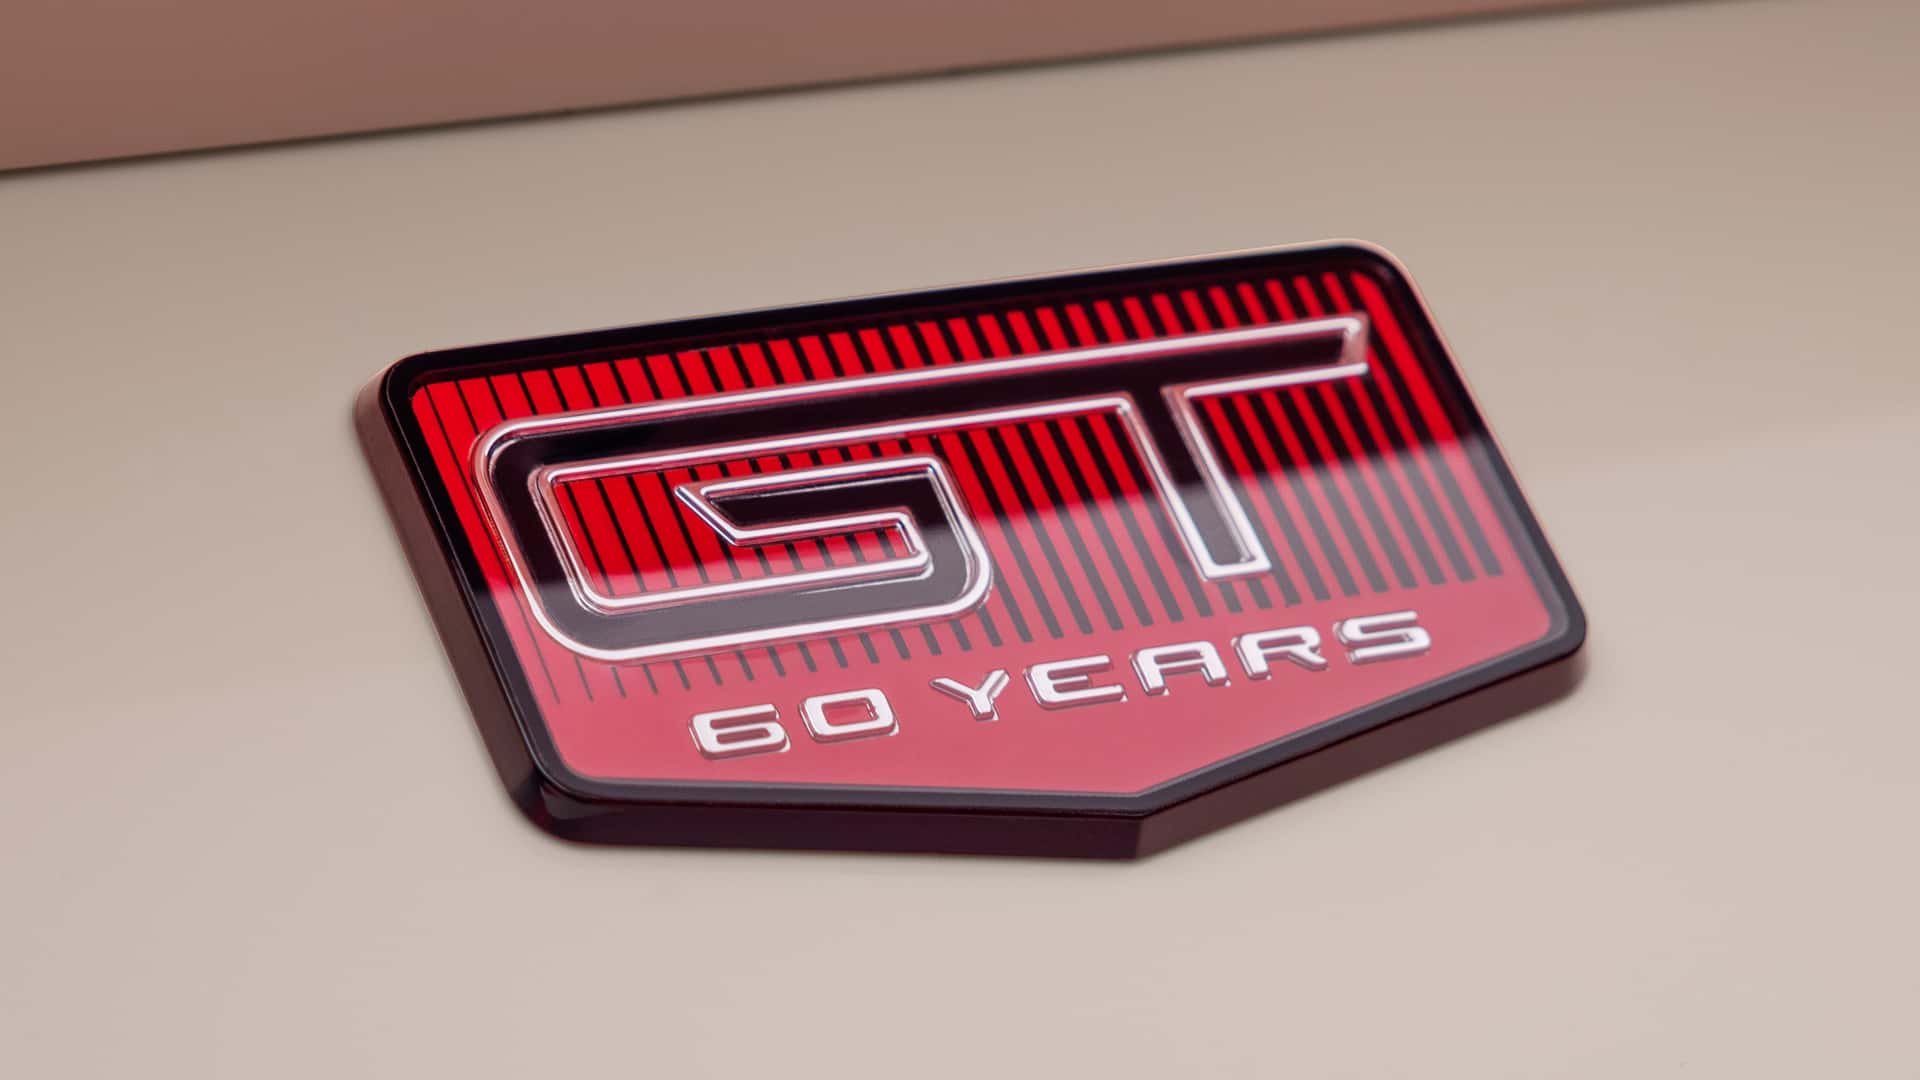 Ford Mustang 60 Aniversario logo GT